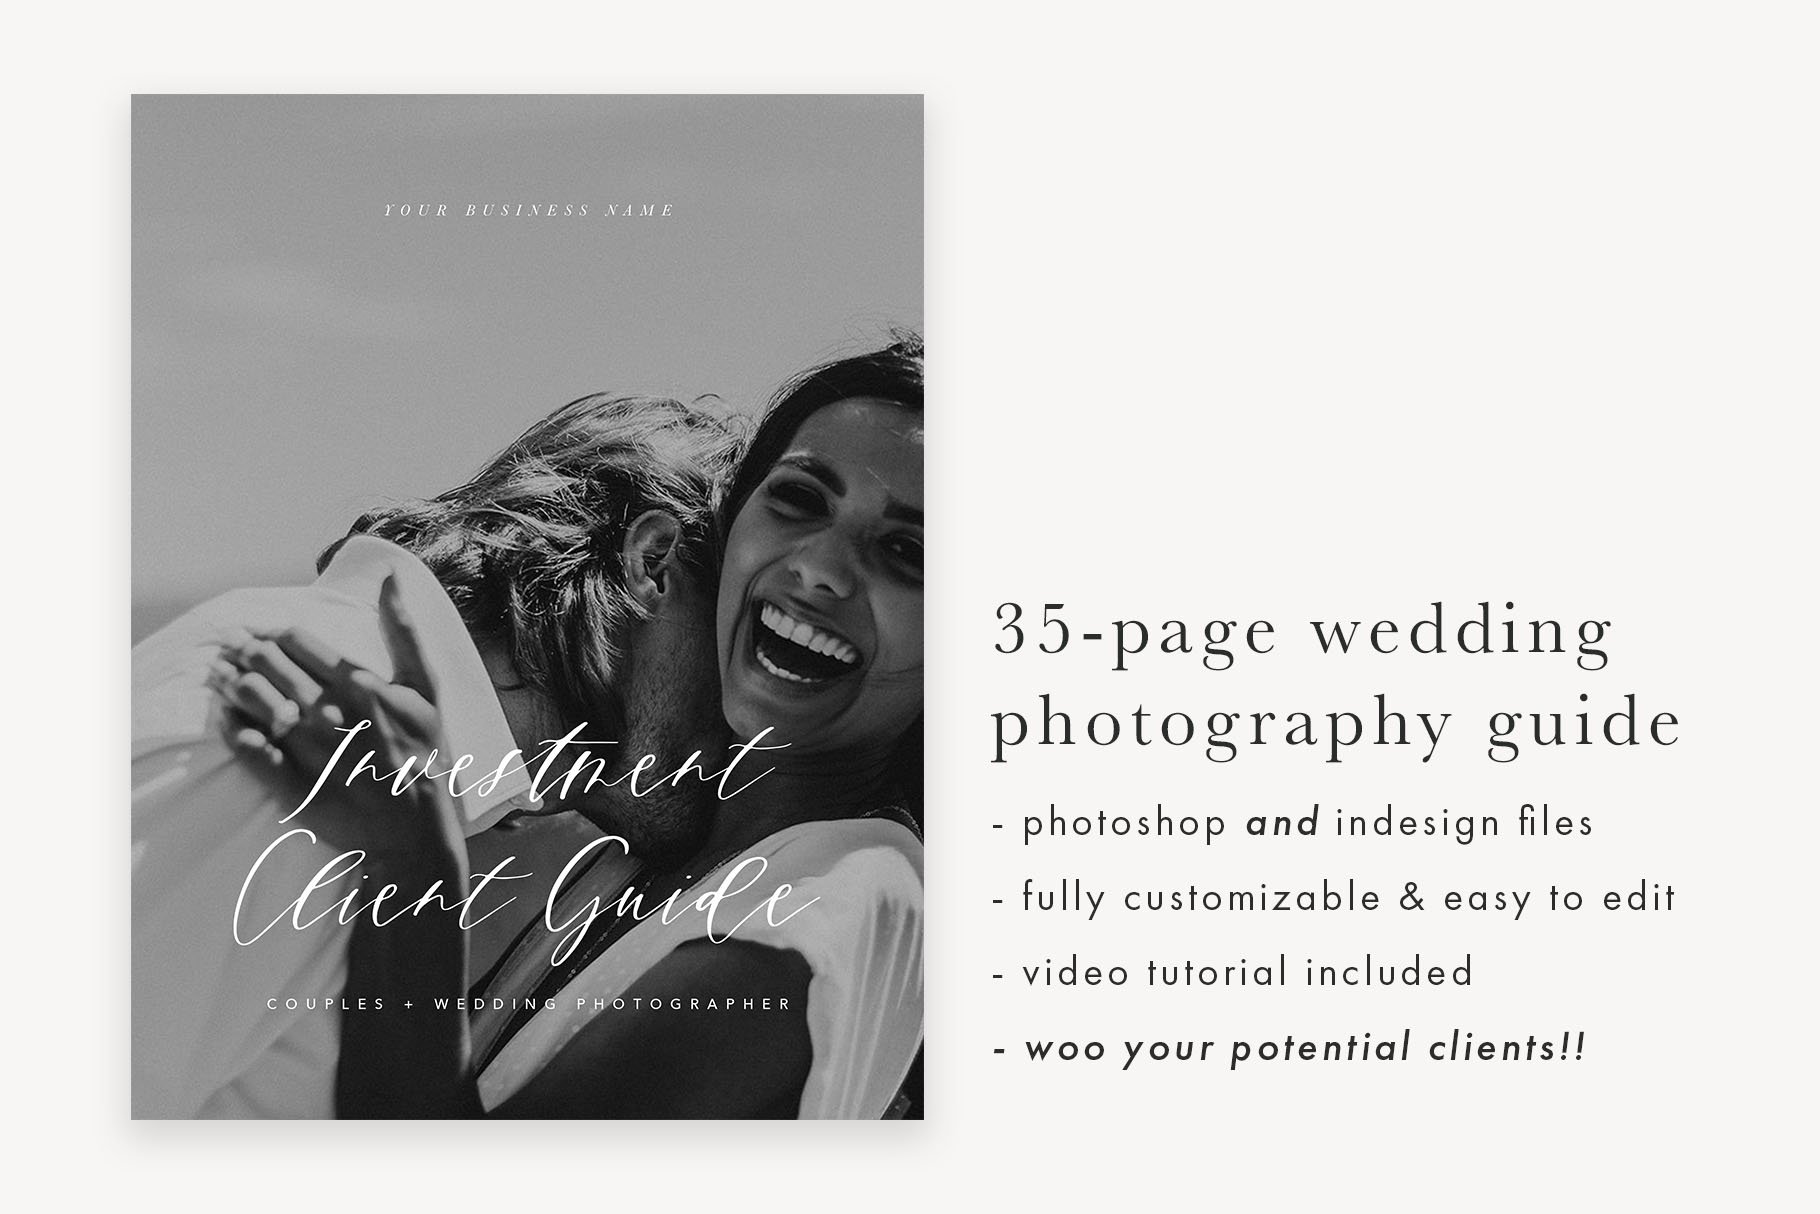 35-Page Wedding Photography Magazine cover image.